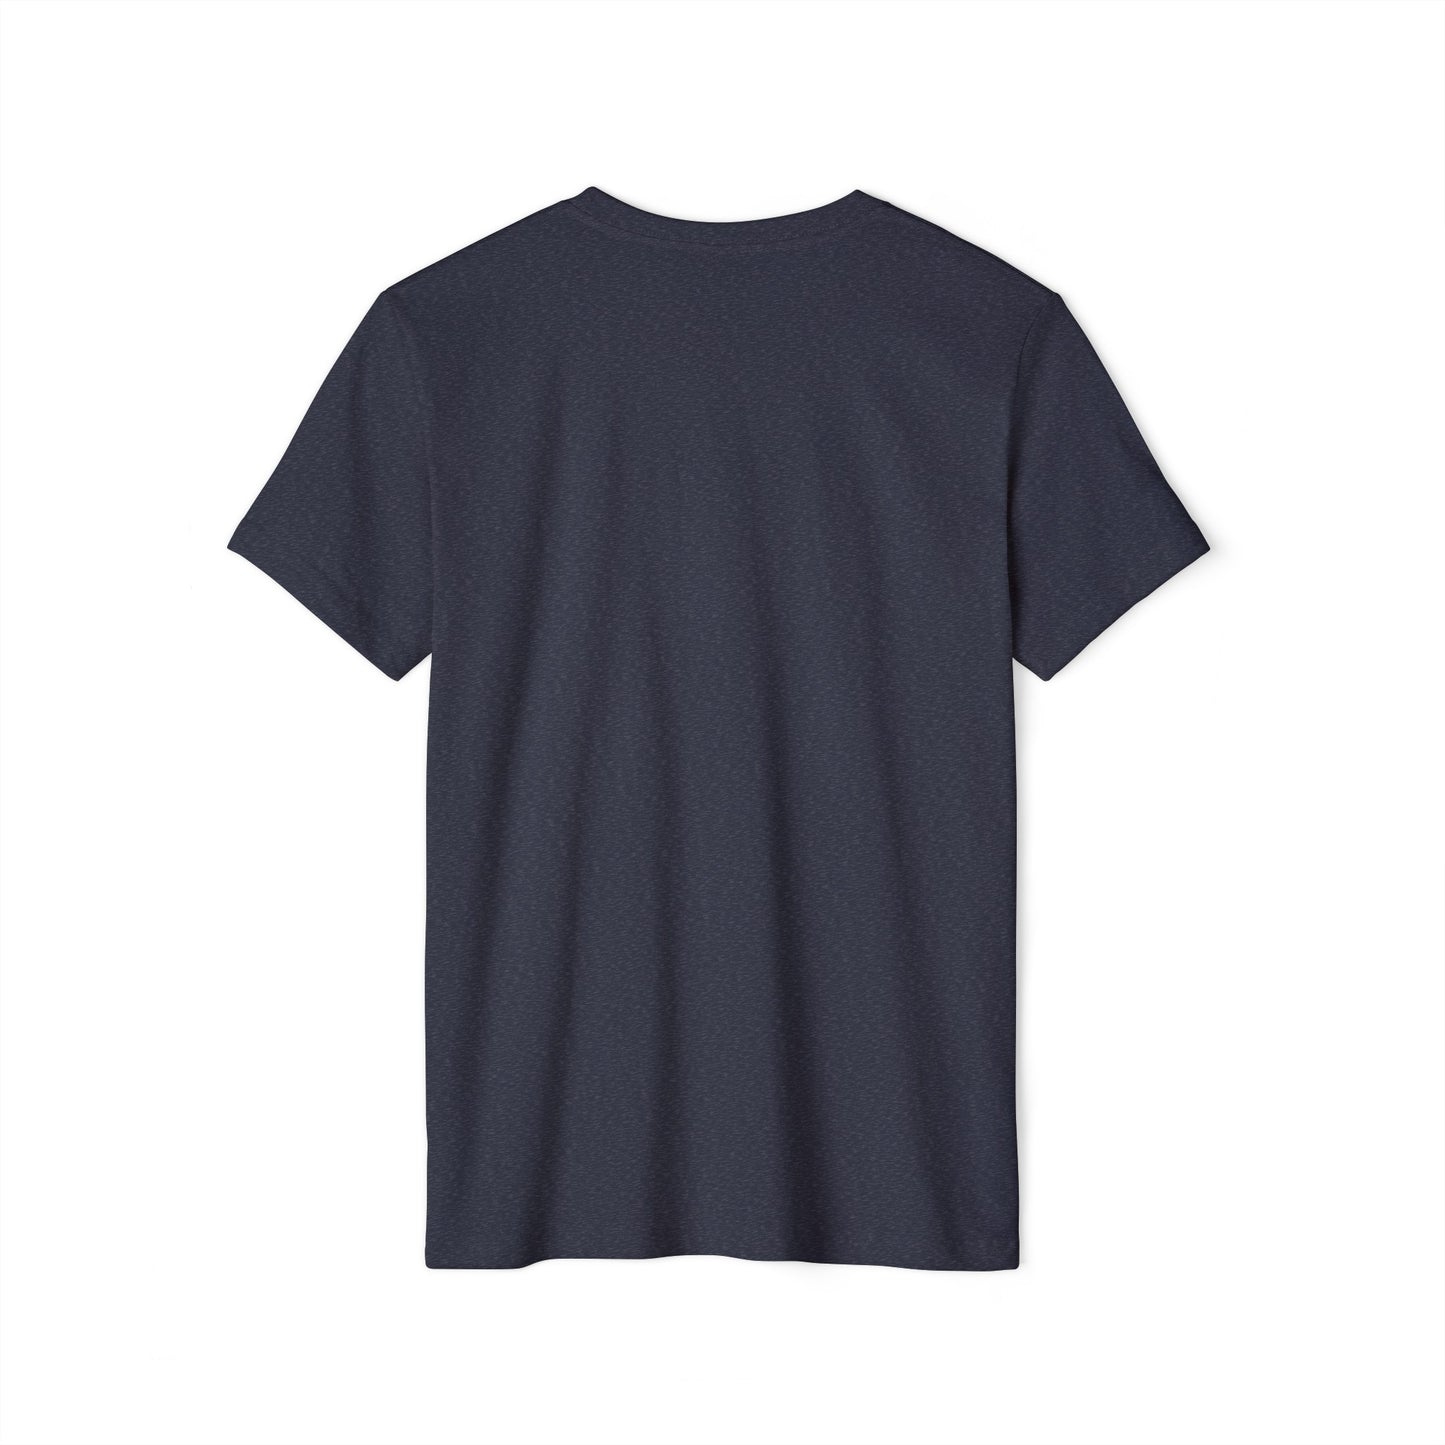 INSPIRED Everything Is Always... Unisex ORGANIC T-Shirt